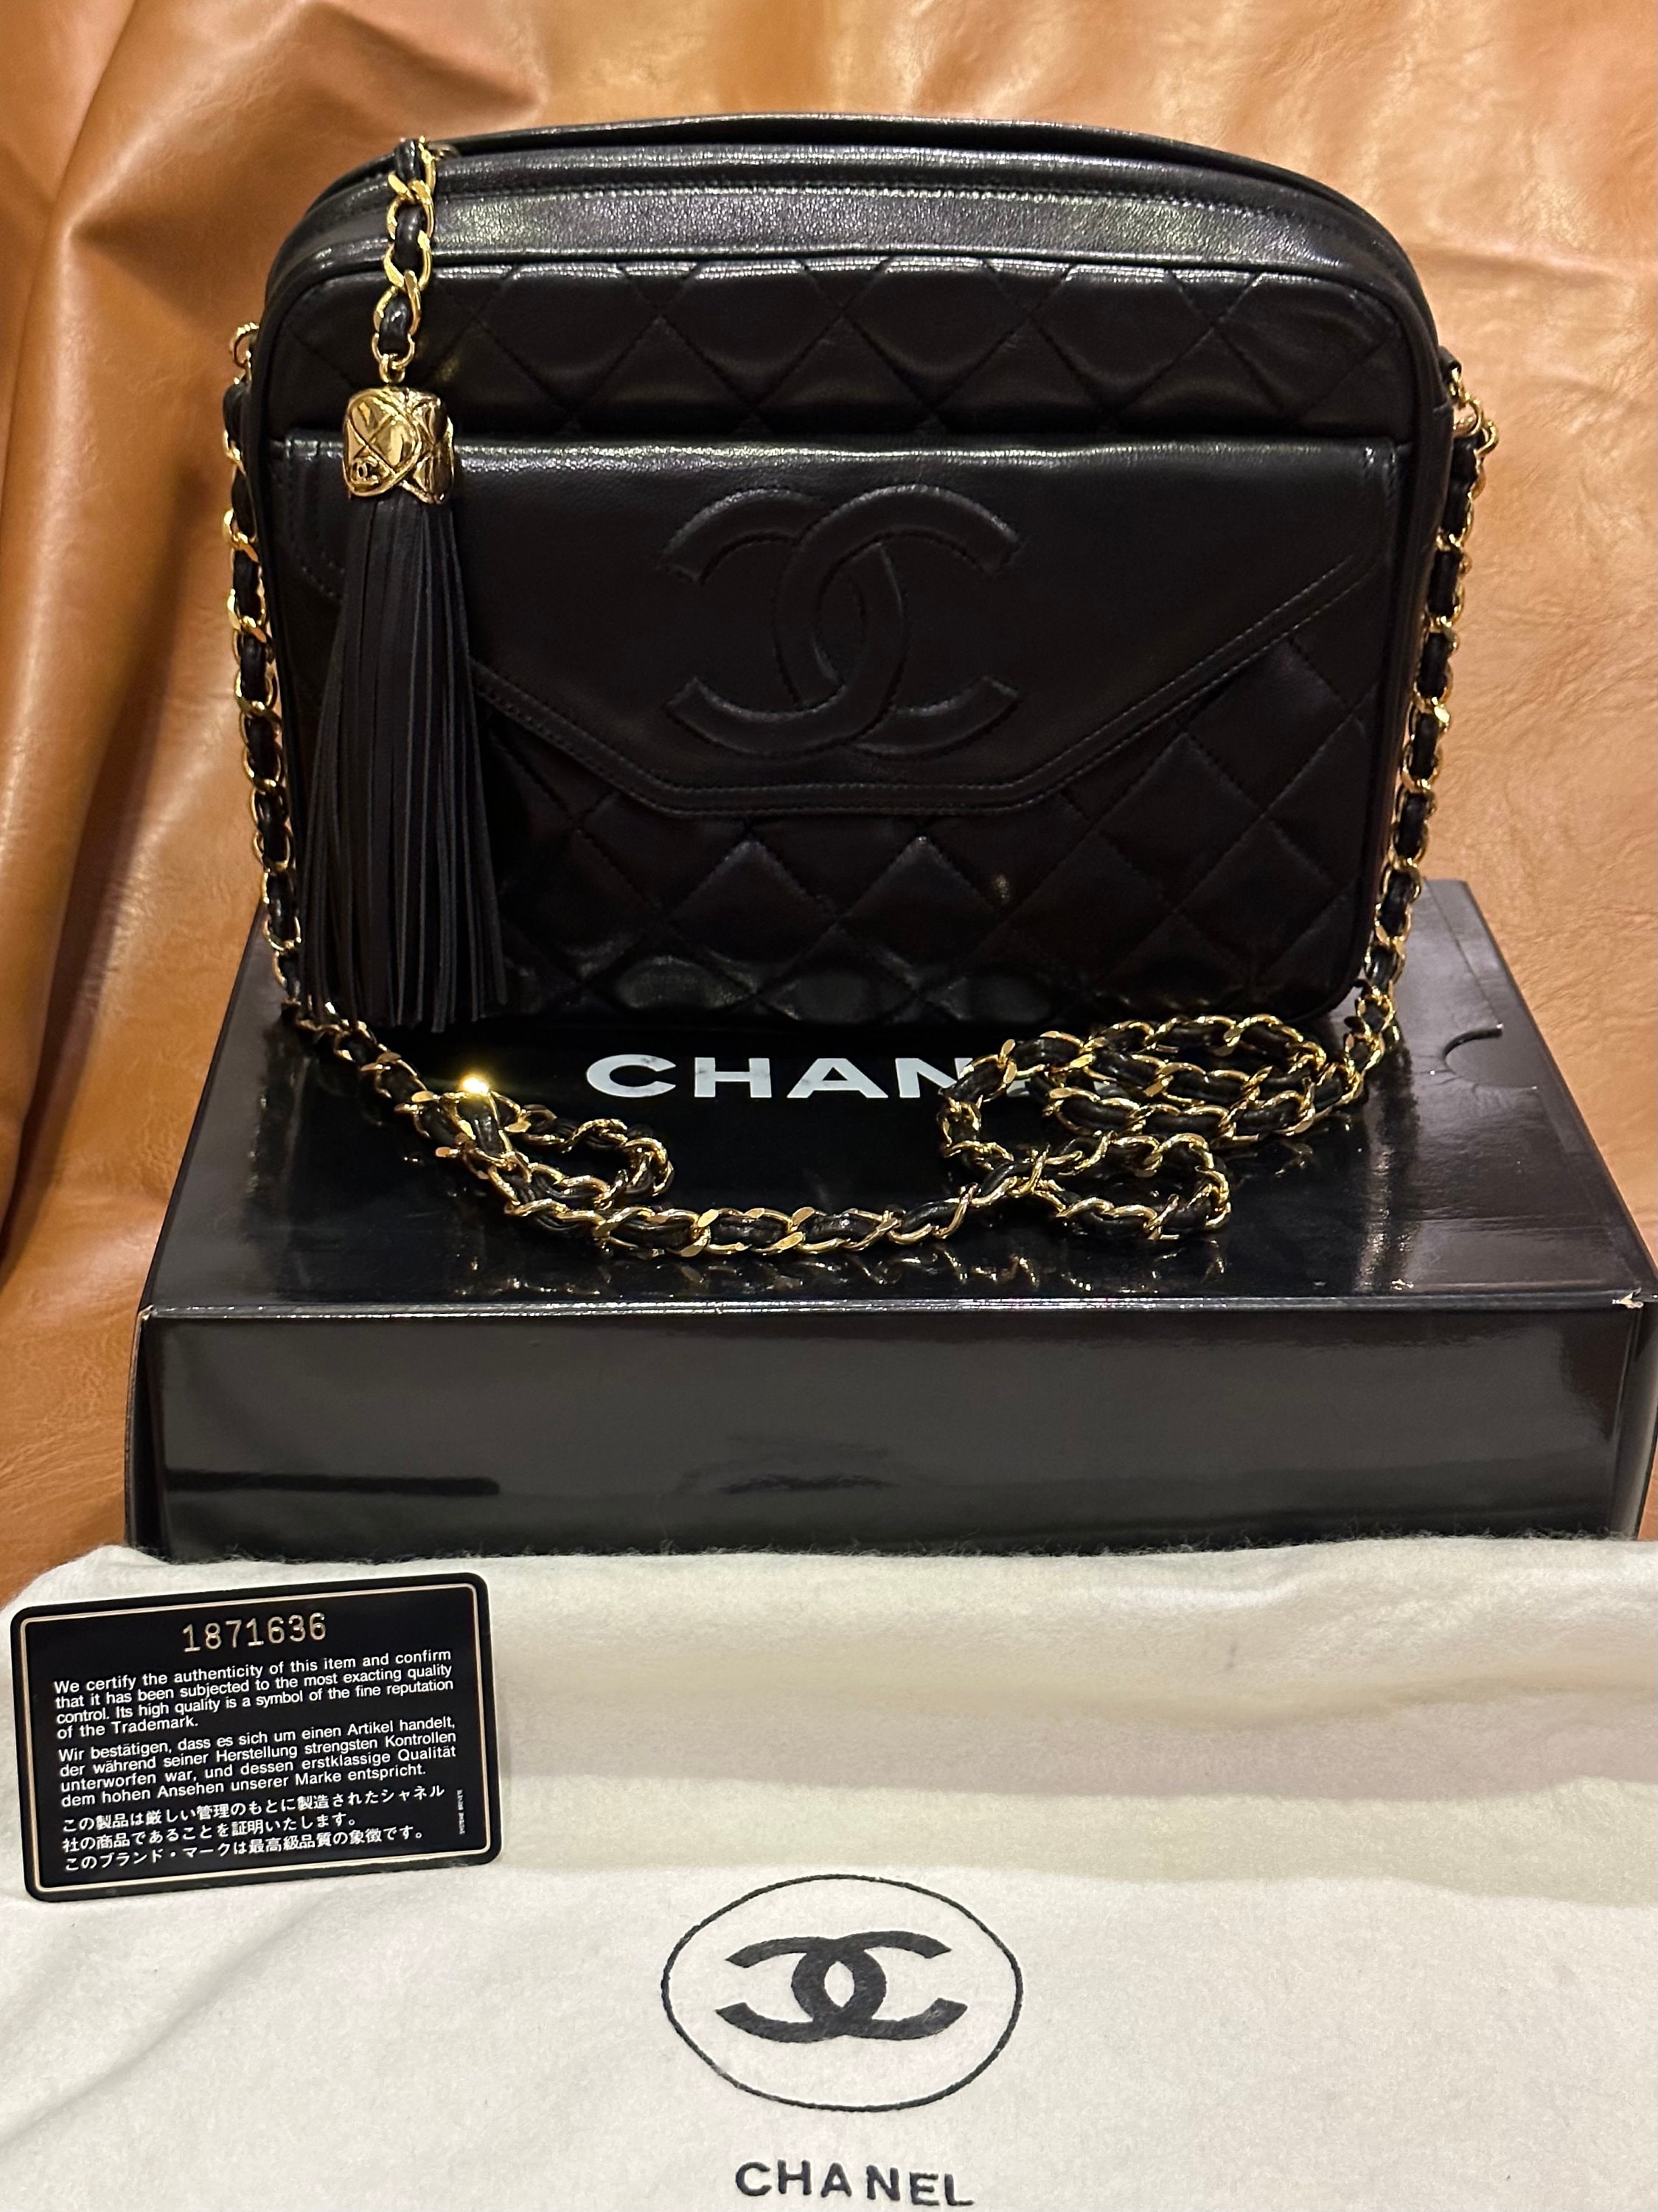 Chanel Crossbody Bag 